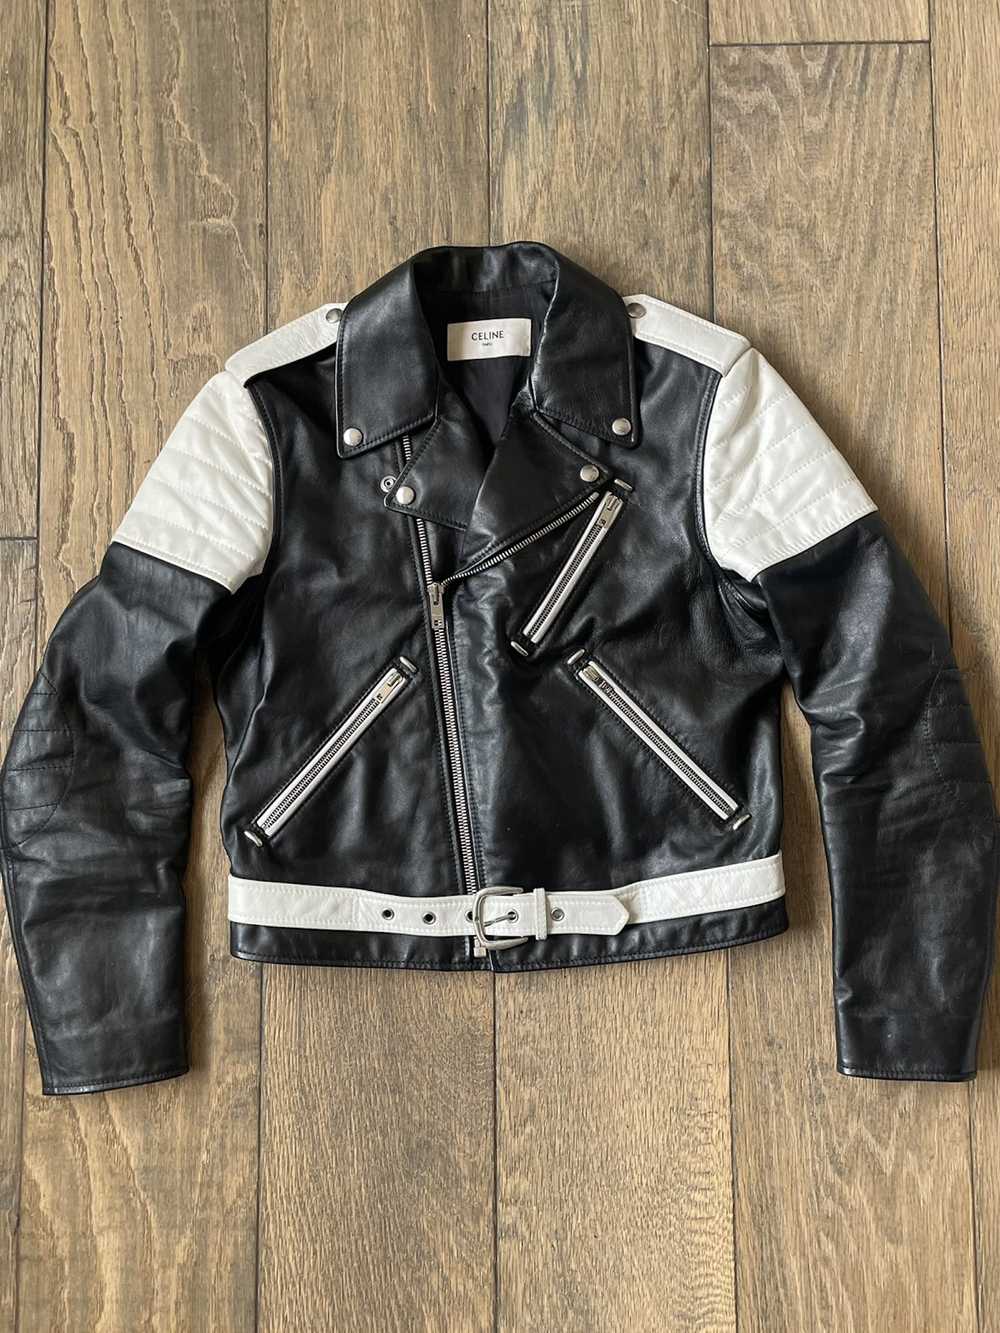 Celine Celine Motorcycle Leather Jacket - image 1